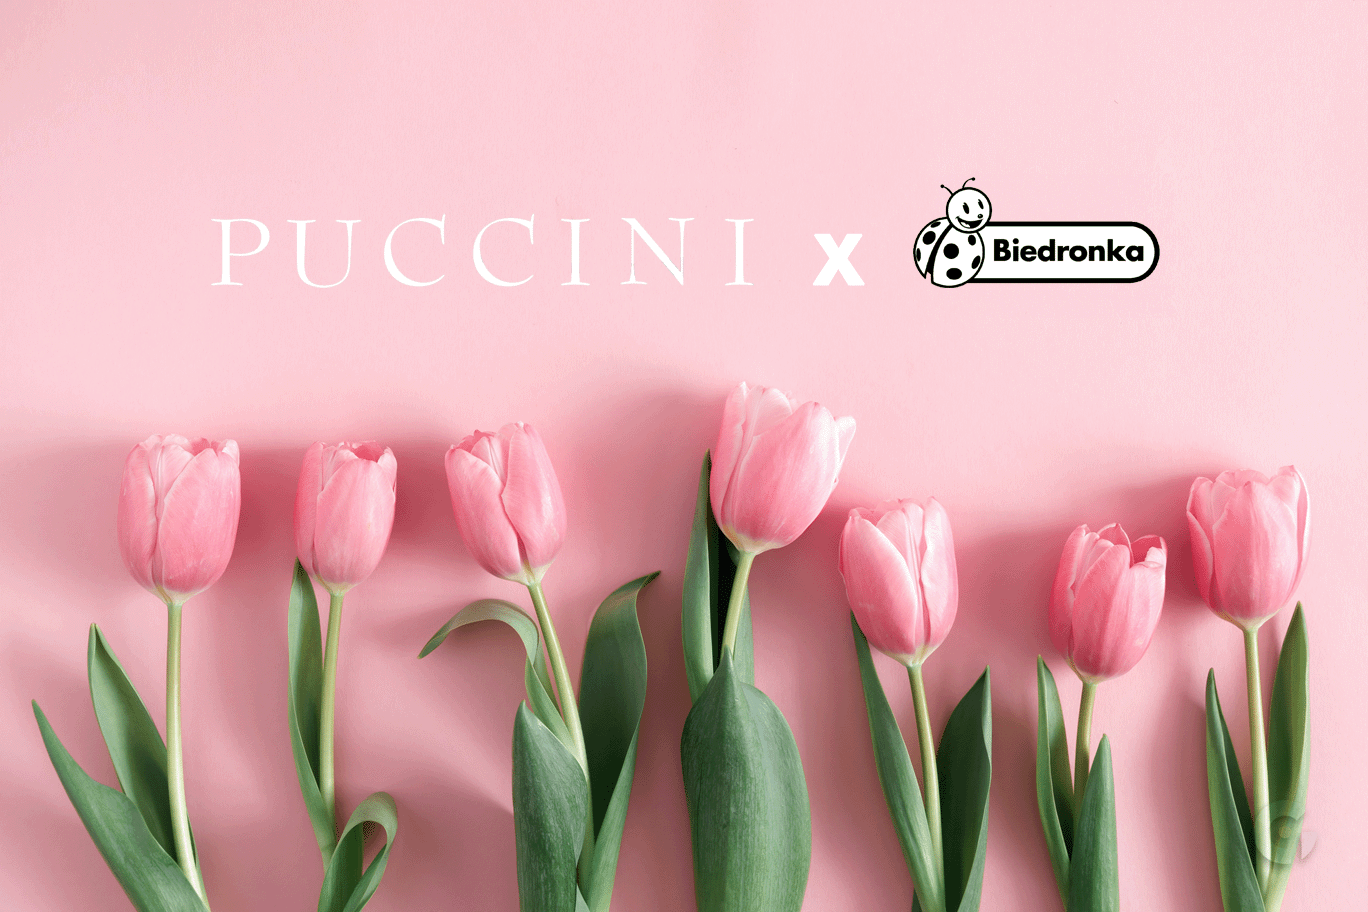 Wiosenna kolekcja Puccini w Biedronce